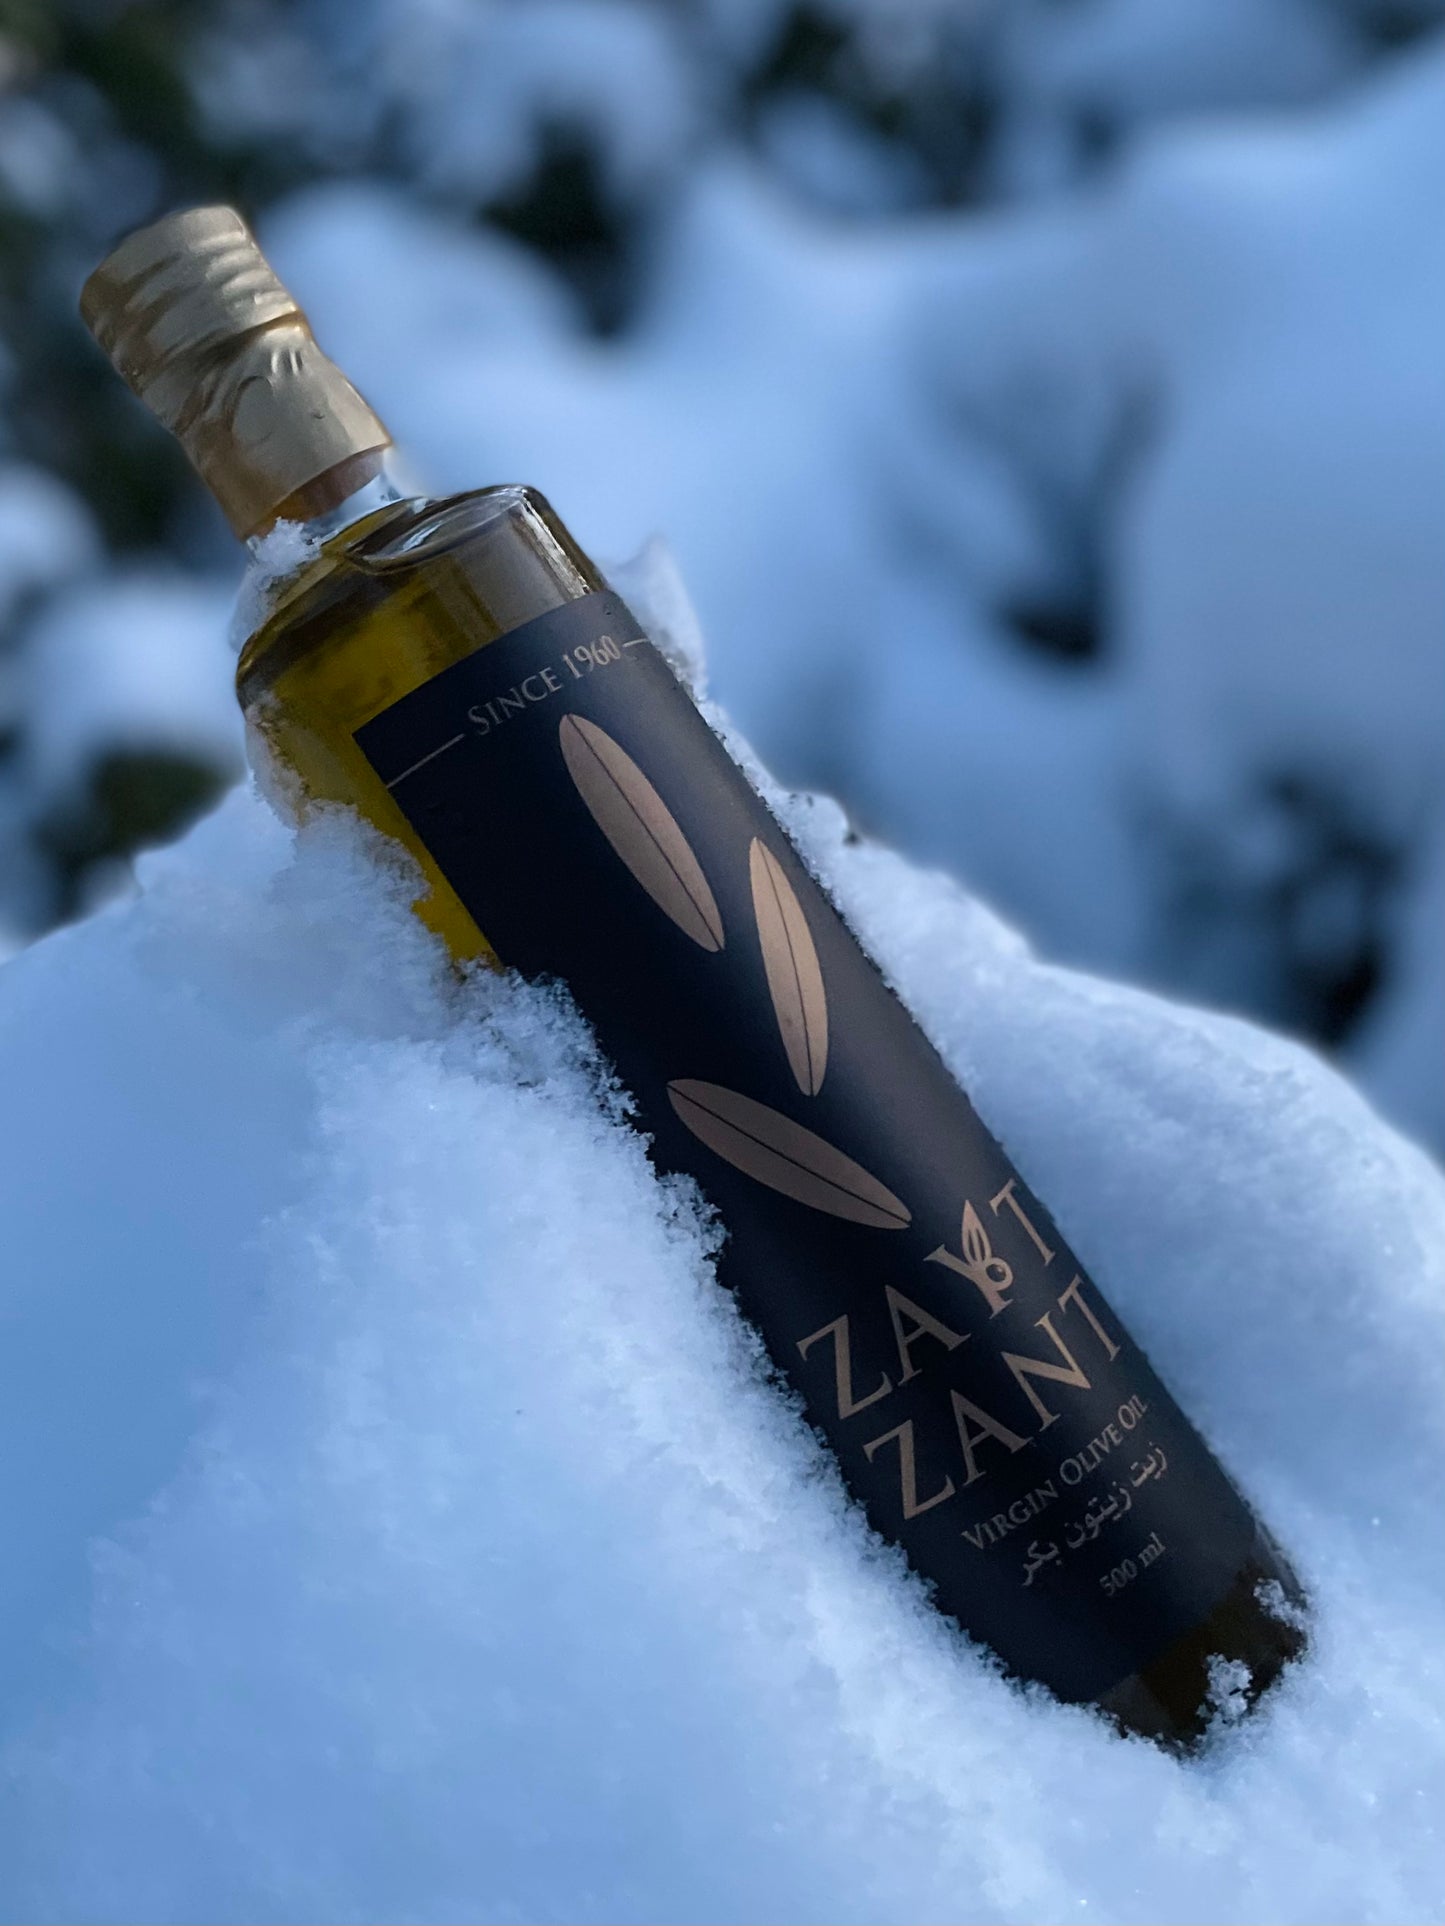 100% Pure Virgin Olive Oil, Single-Source, Imported, (500 mL) bottle